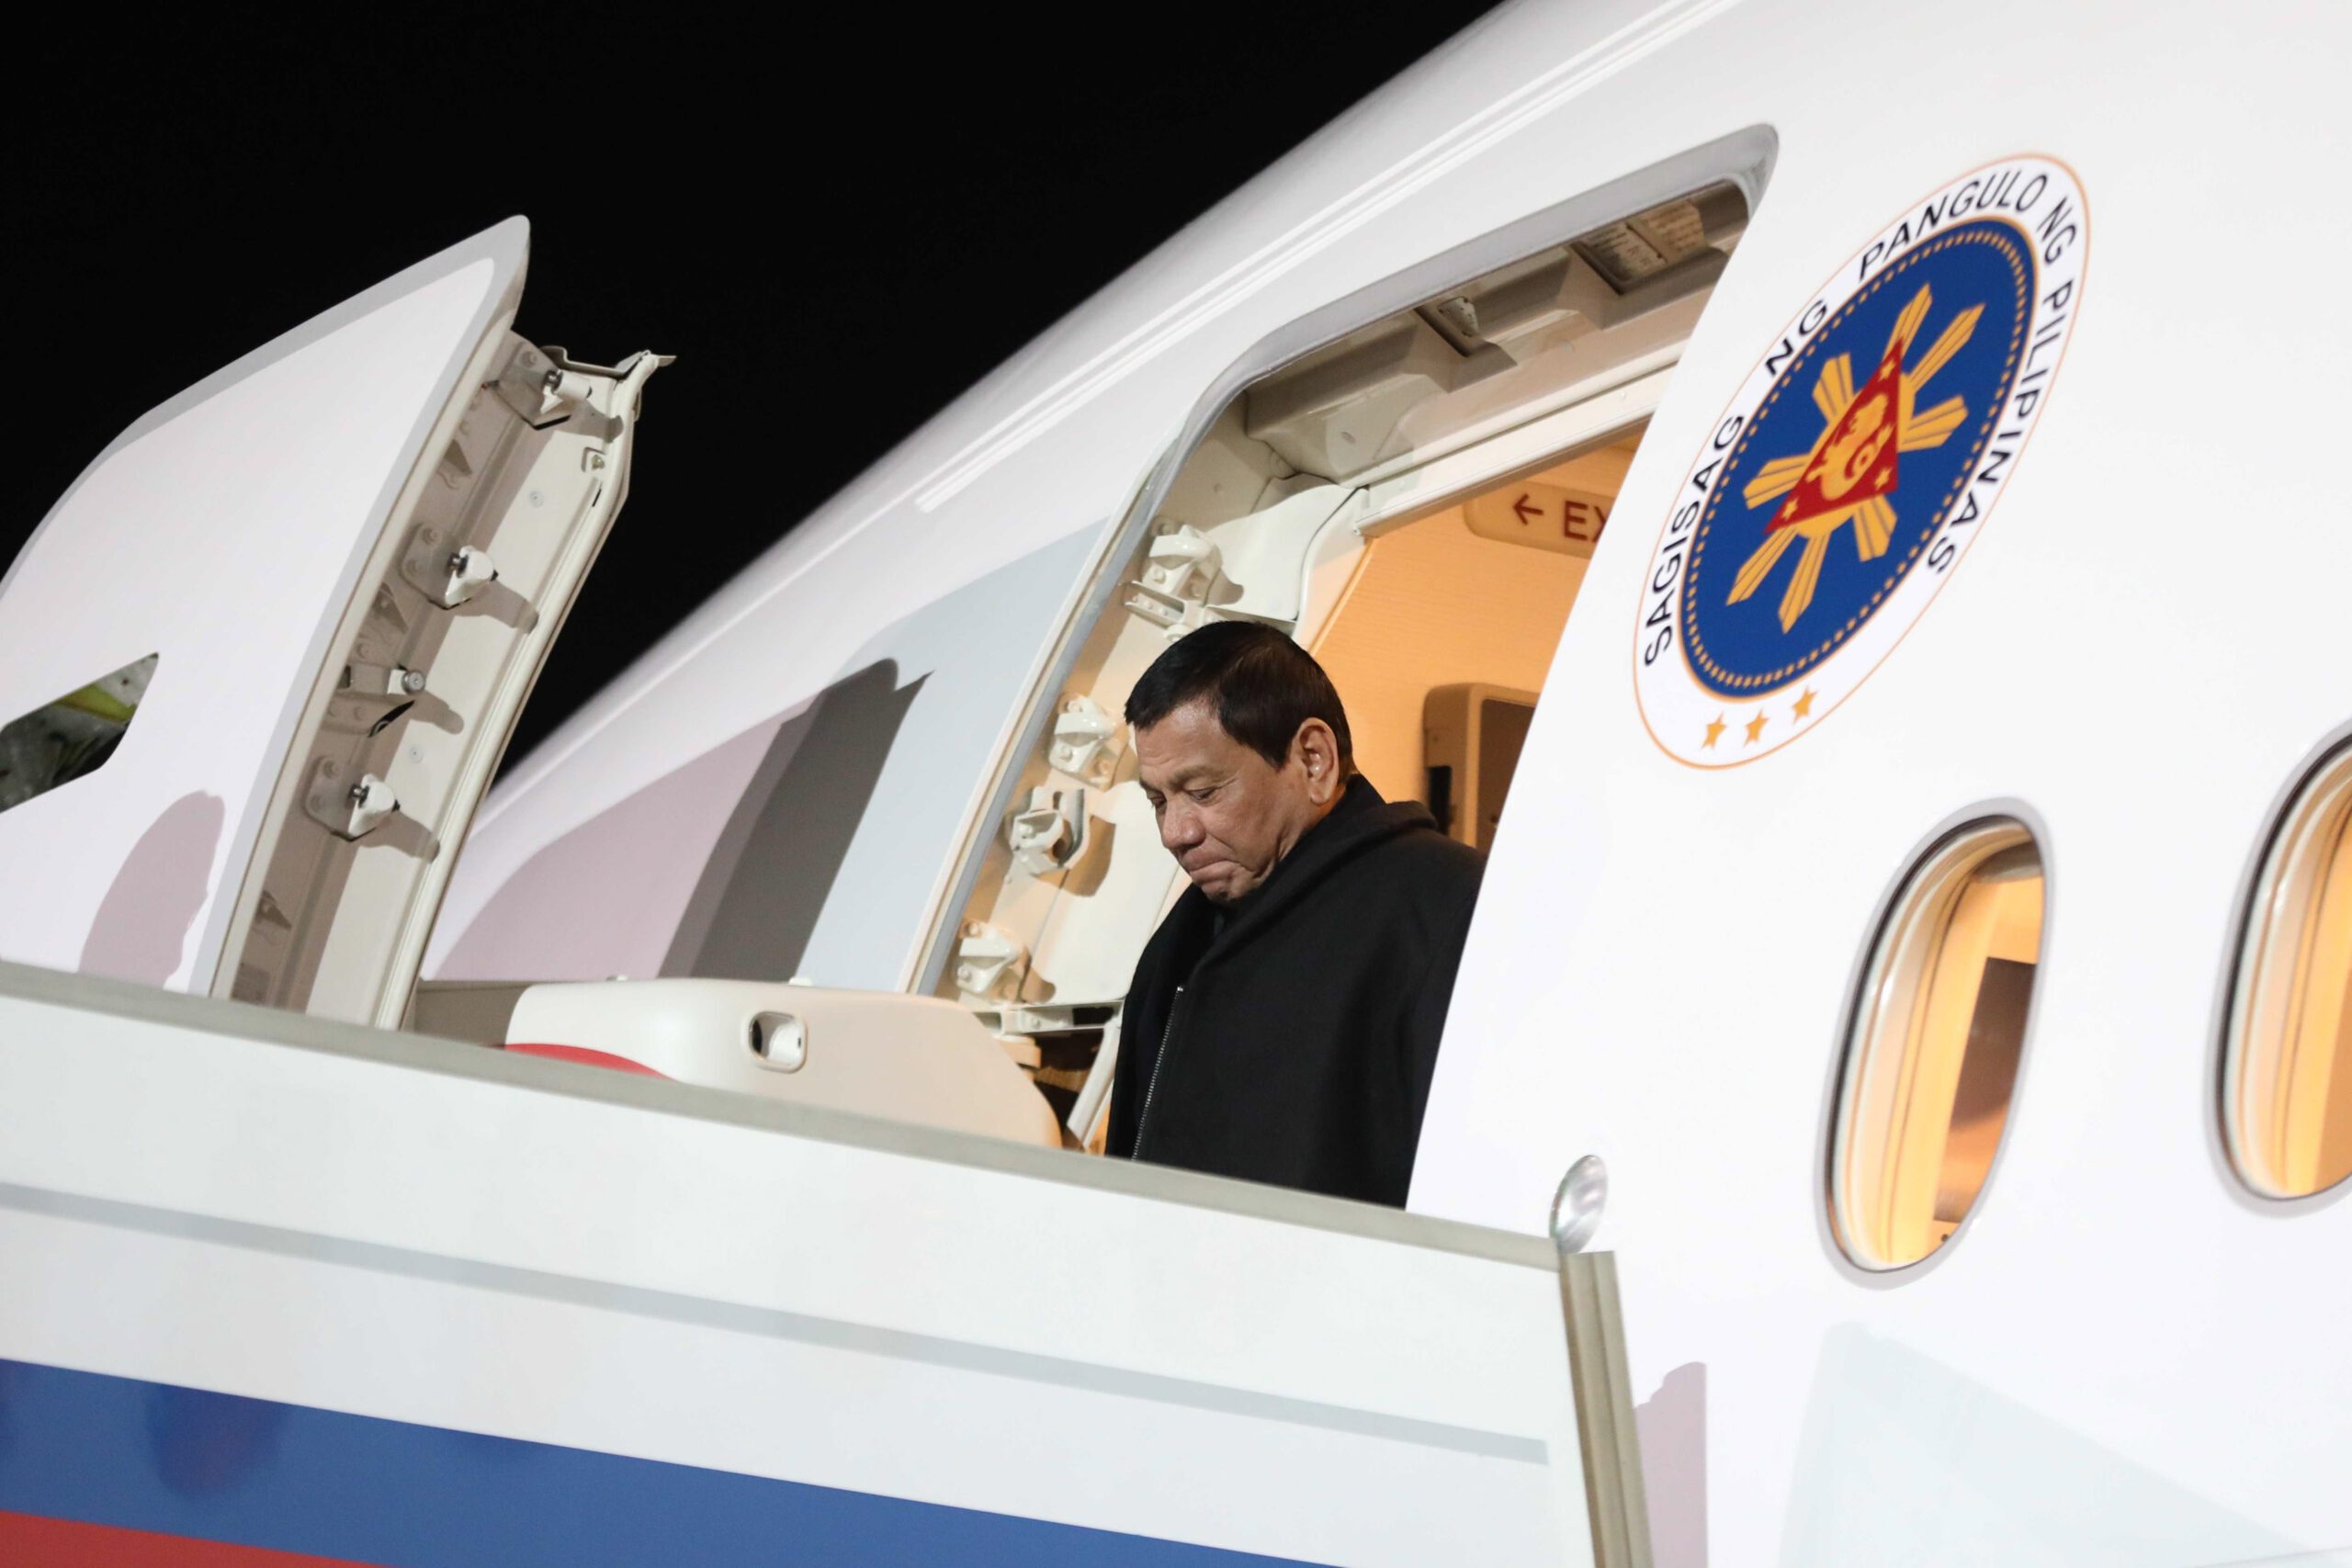 Snubbed? ASEAN chairman Duterte wasn’t invited to G20 Summit